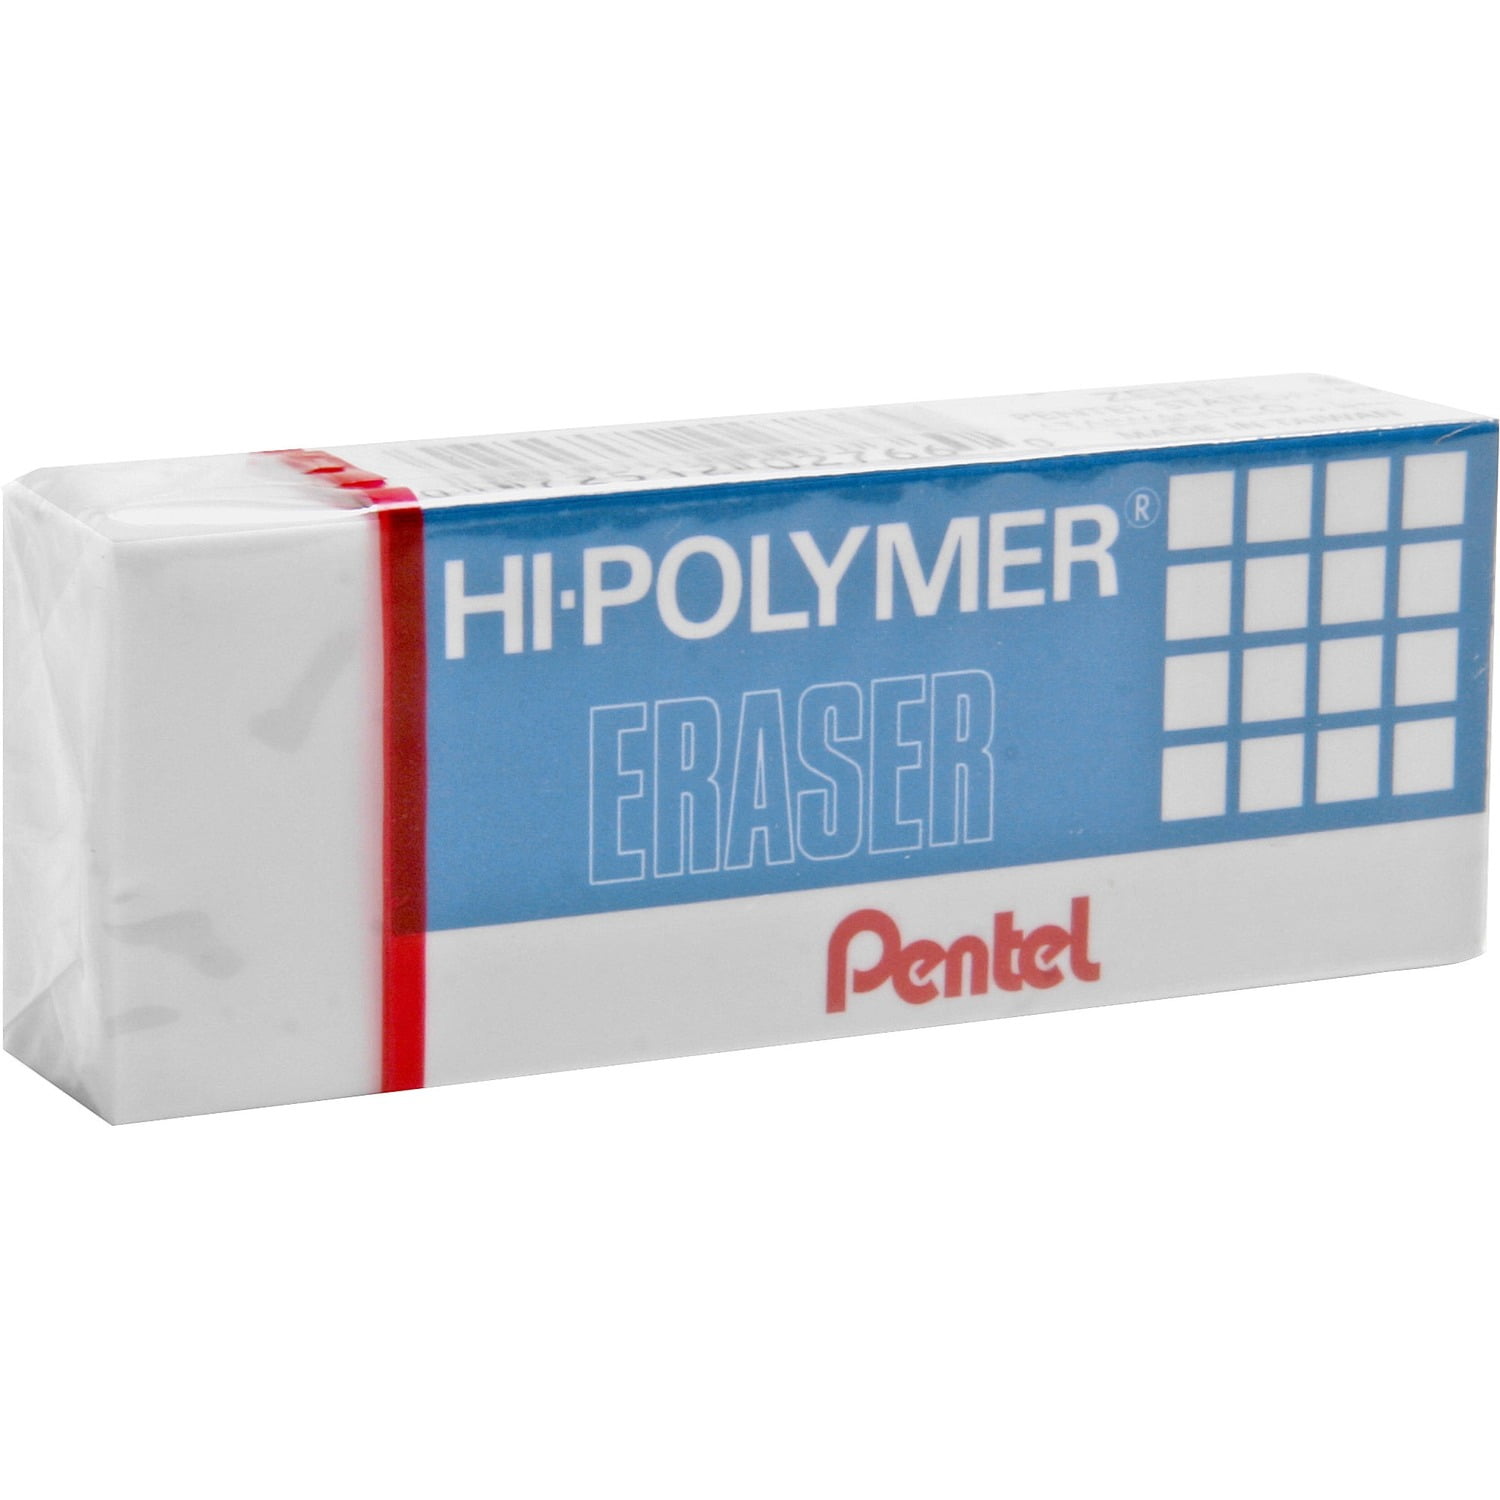 PENTEL Hi-Polymer High Quality Standard & Soft Eraser Small Pack of 3 pcs